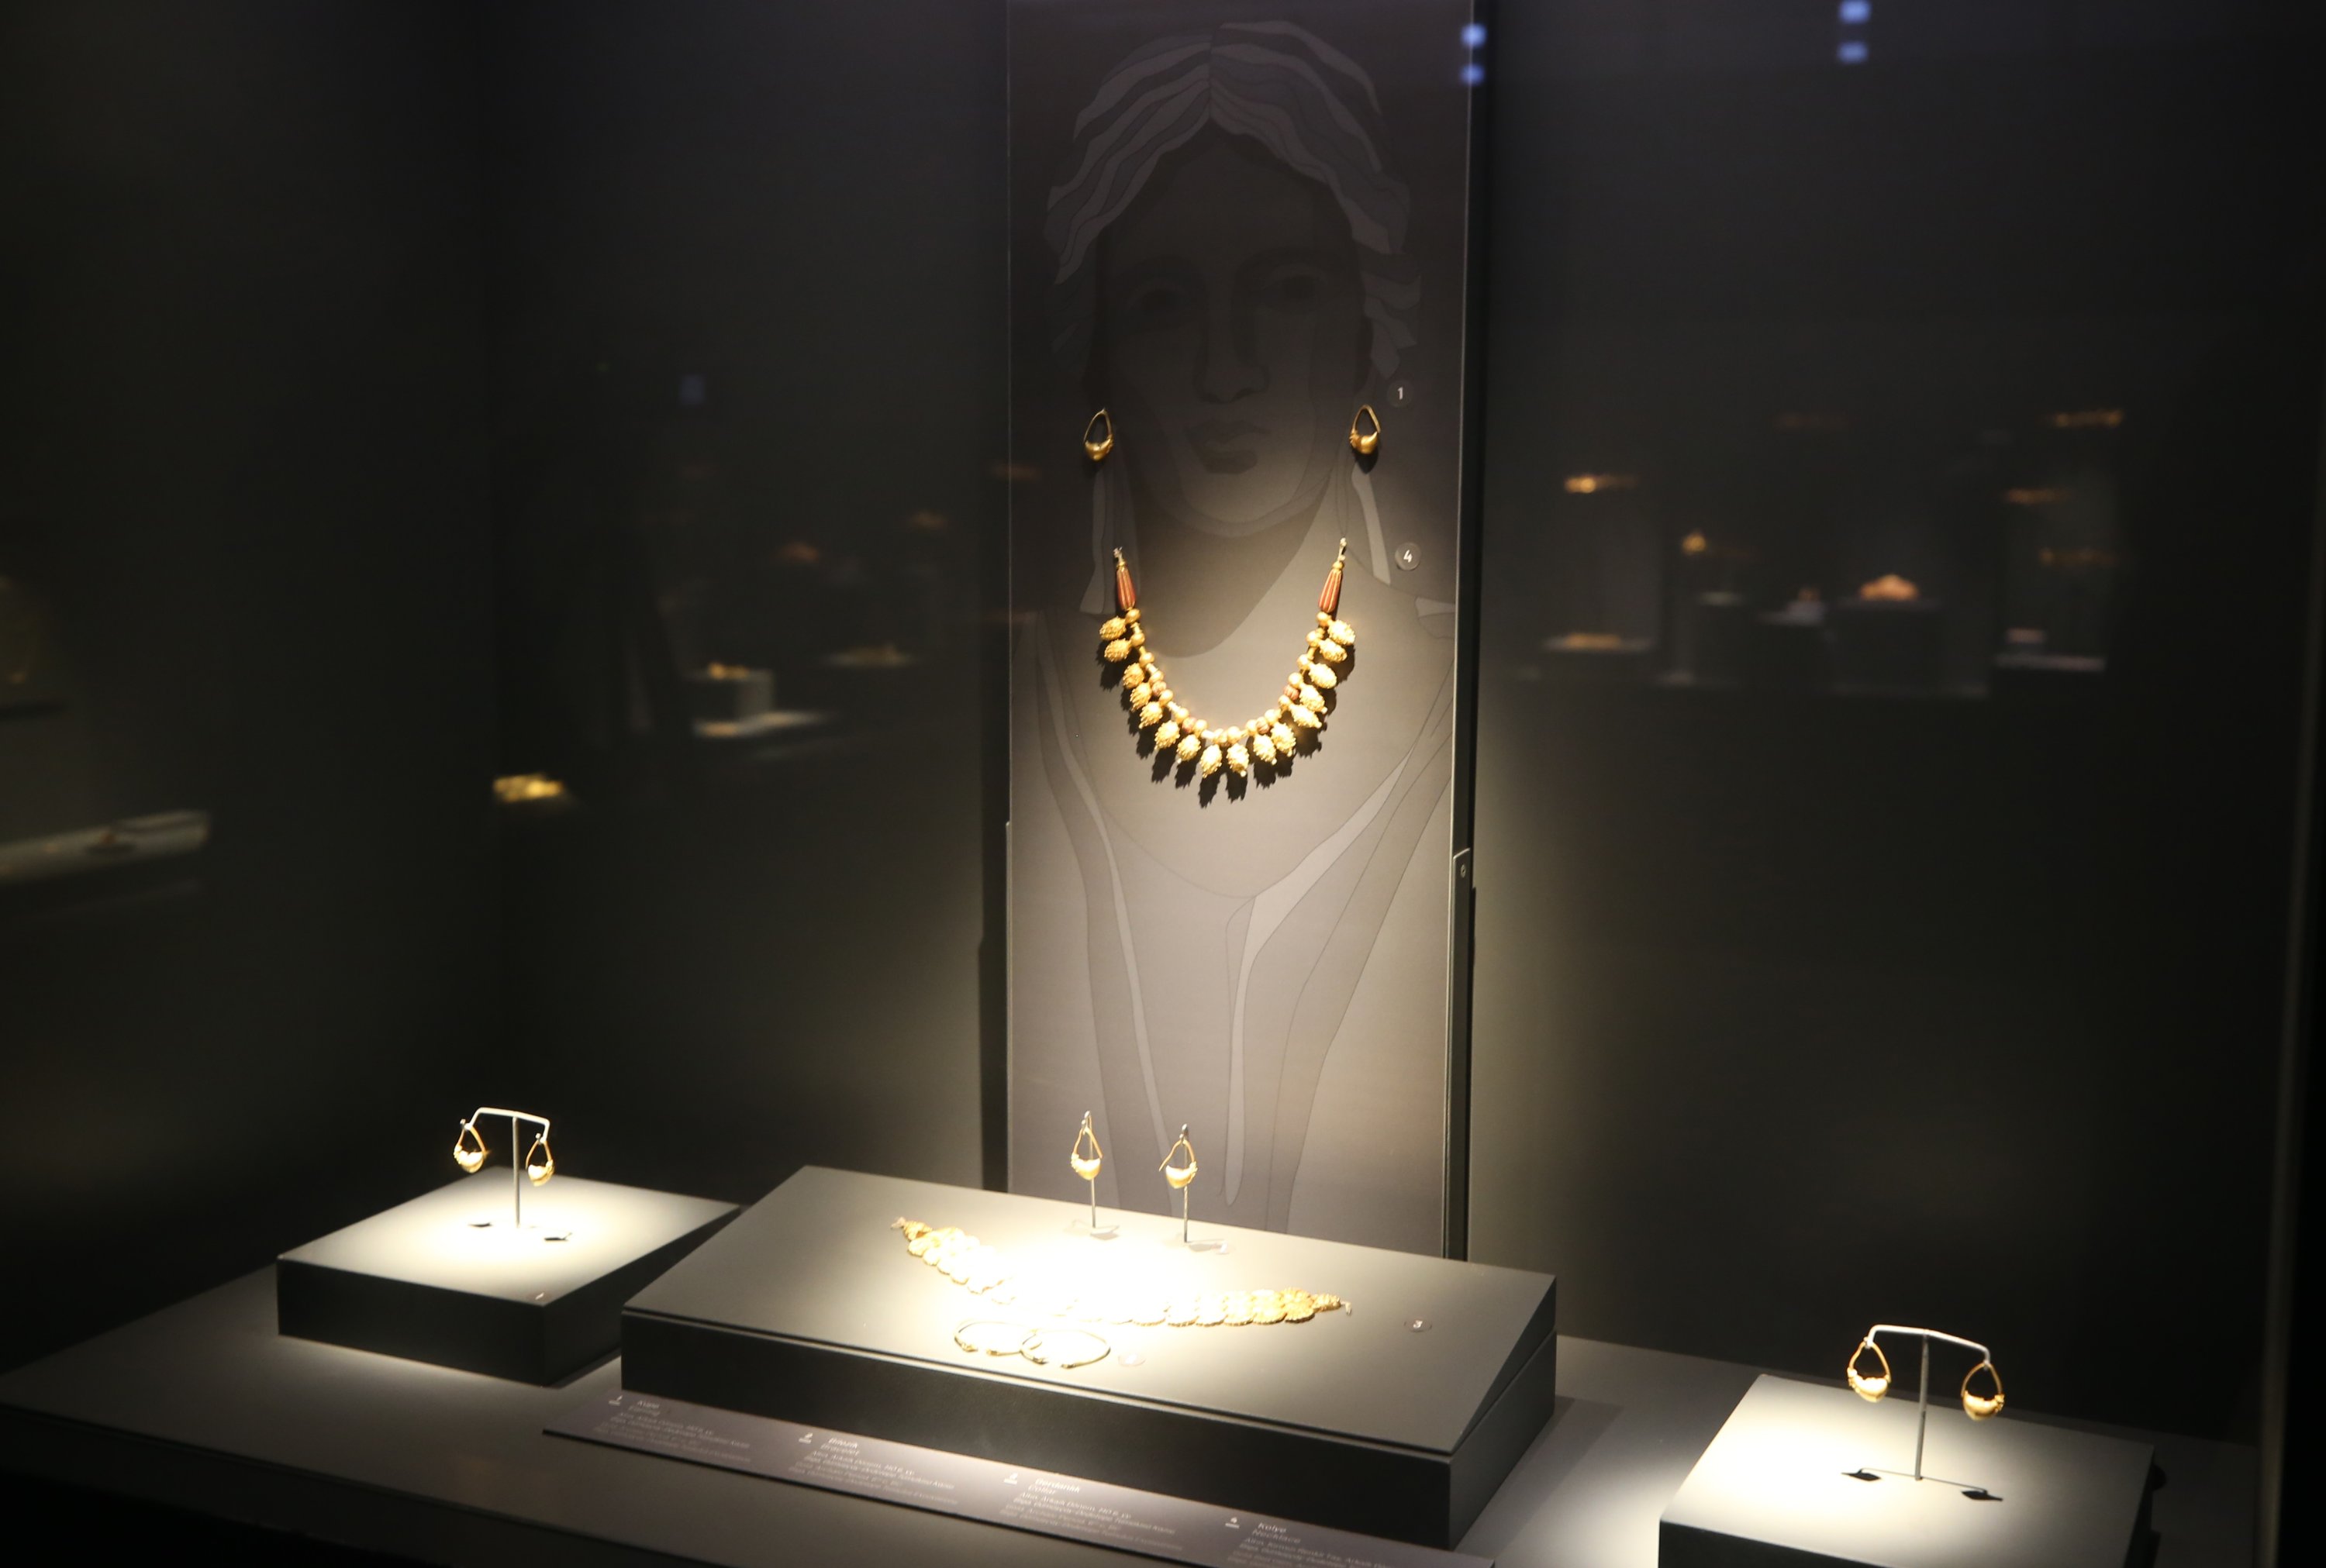 Museum Troy memamerkan perhiasan mempesona milik wanita Troya dari ribuan tahun lalu, di samping artefak yang ditemukan dalam penggalian arkeologi, Çanakkale, Türkiye, 31 Mei 2023. (Foto AA)